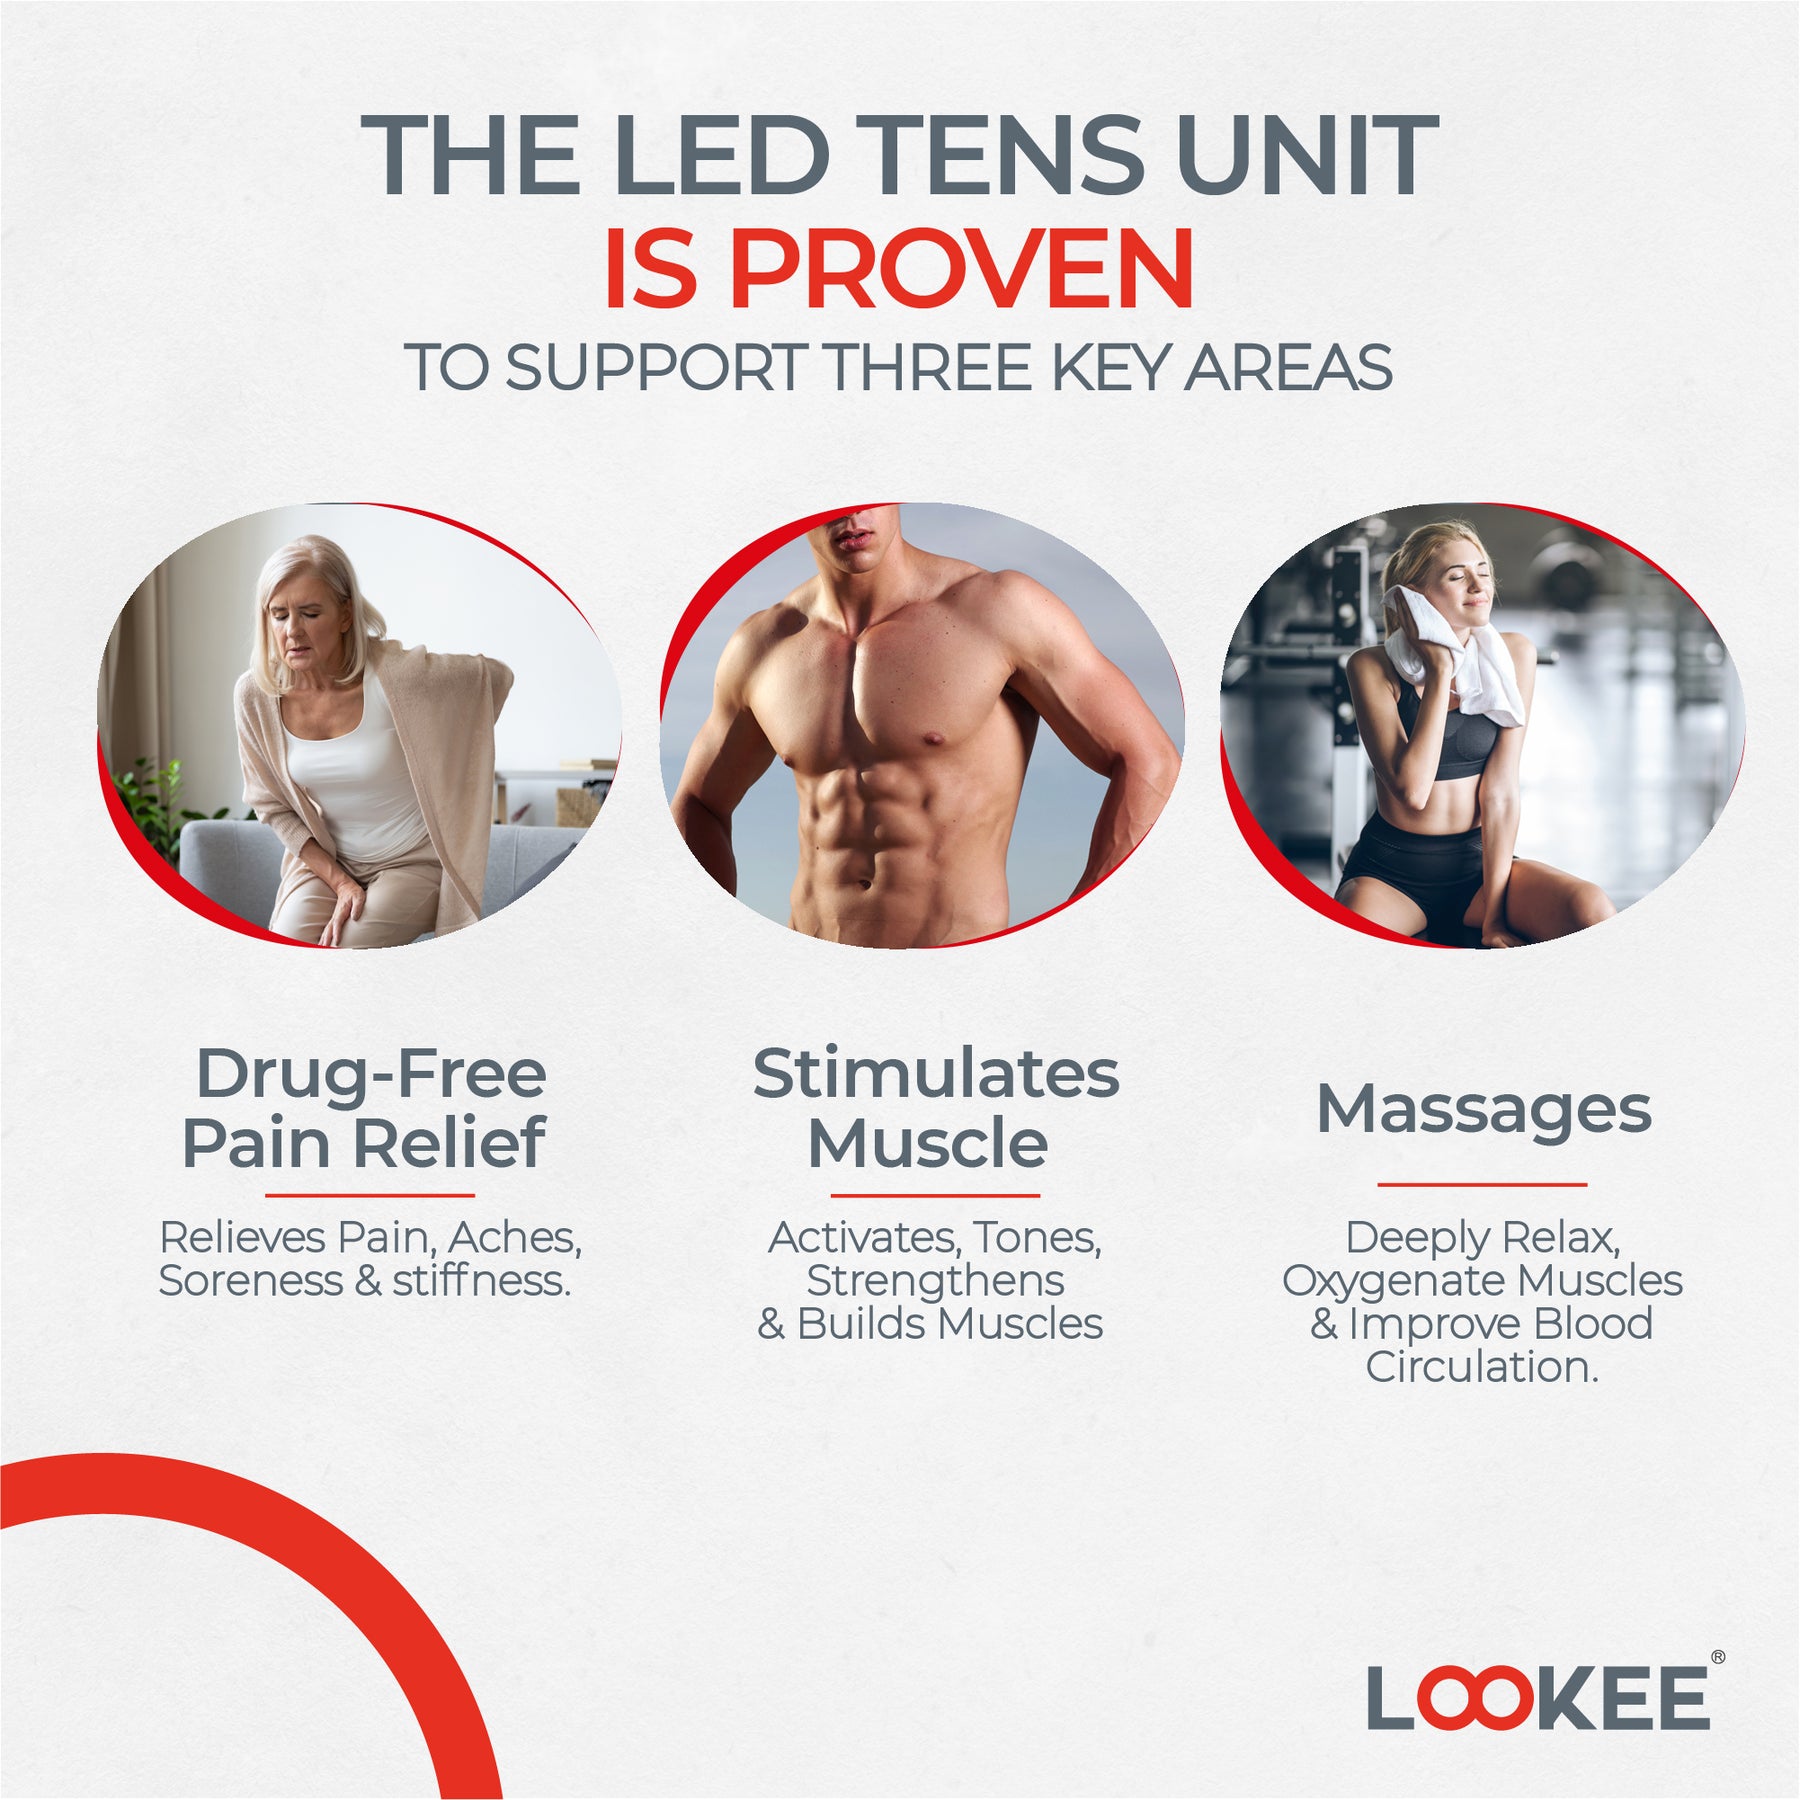 TENS/EMS Back Pain Device • LED Technologies, Inc